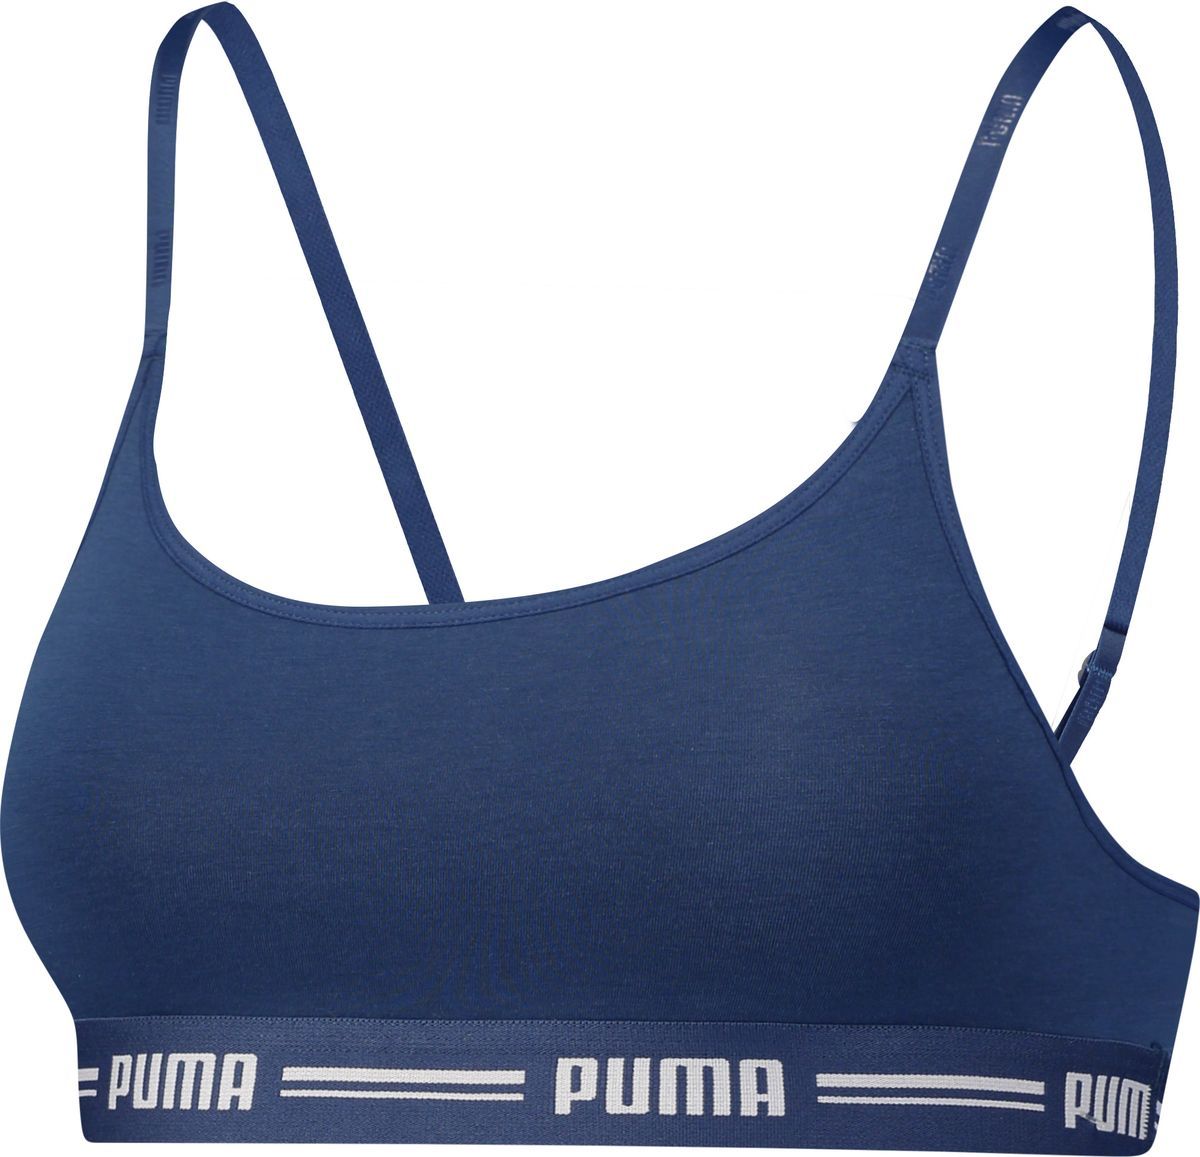 - Puma Iconic Casual, : -. 90707206.  XL (48/50)